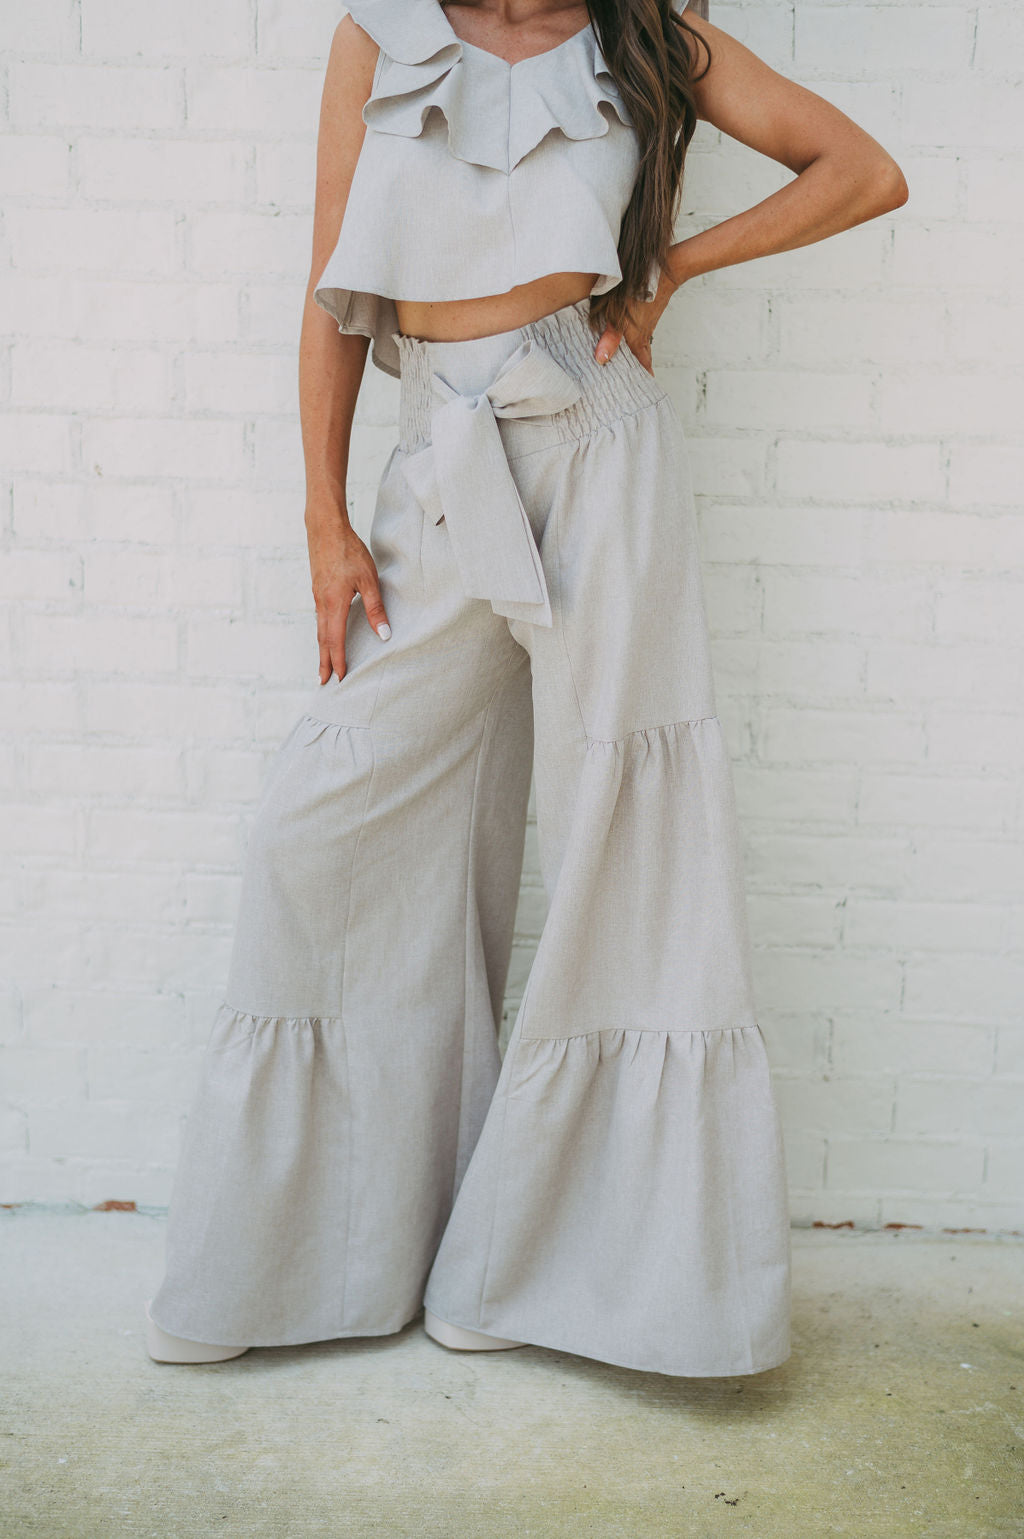 Moira Bengaline Pants - White  Slim legs, Tencel dress, Summer tie dye